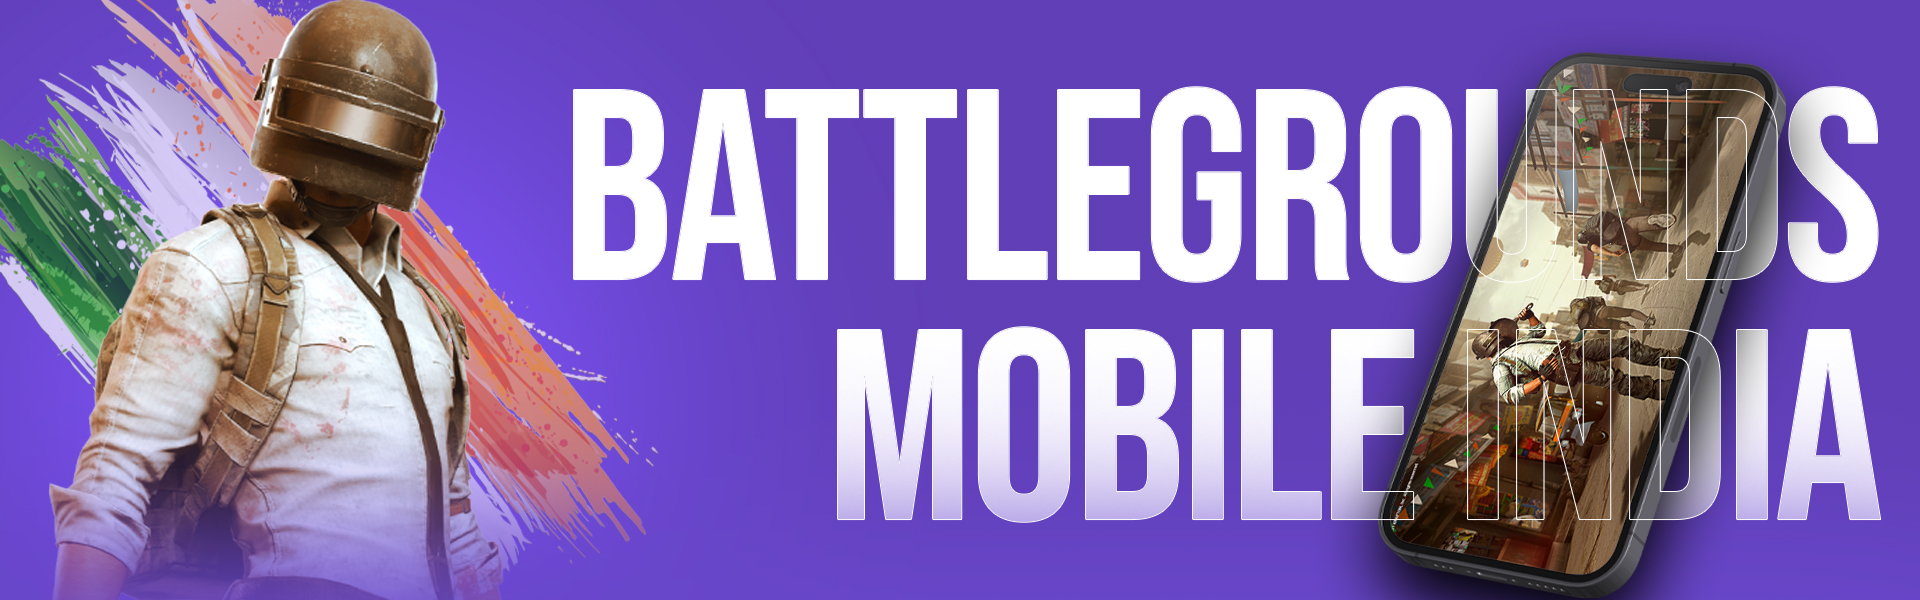 Battlegrounds Mobile India
